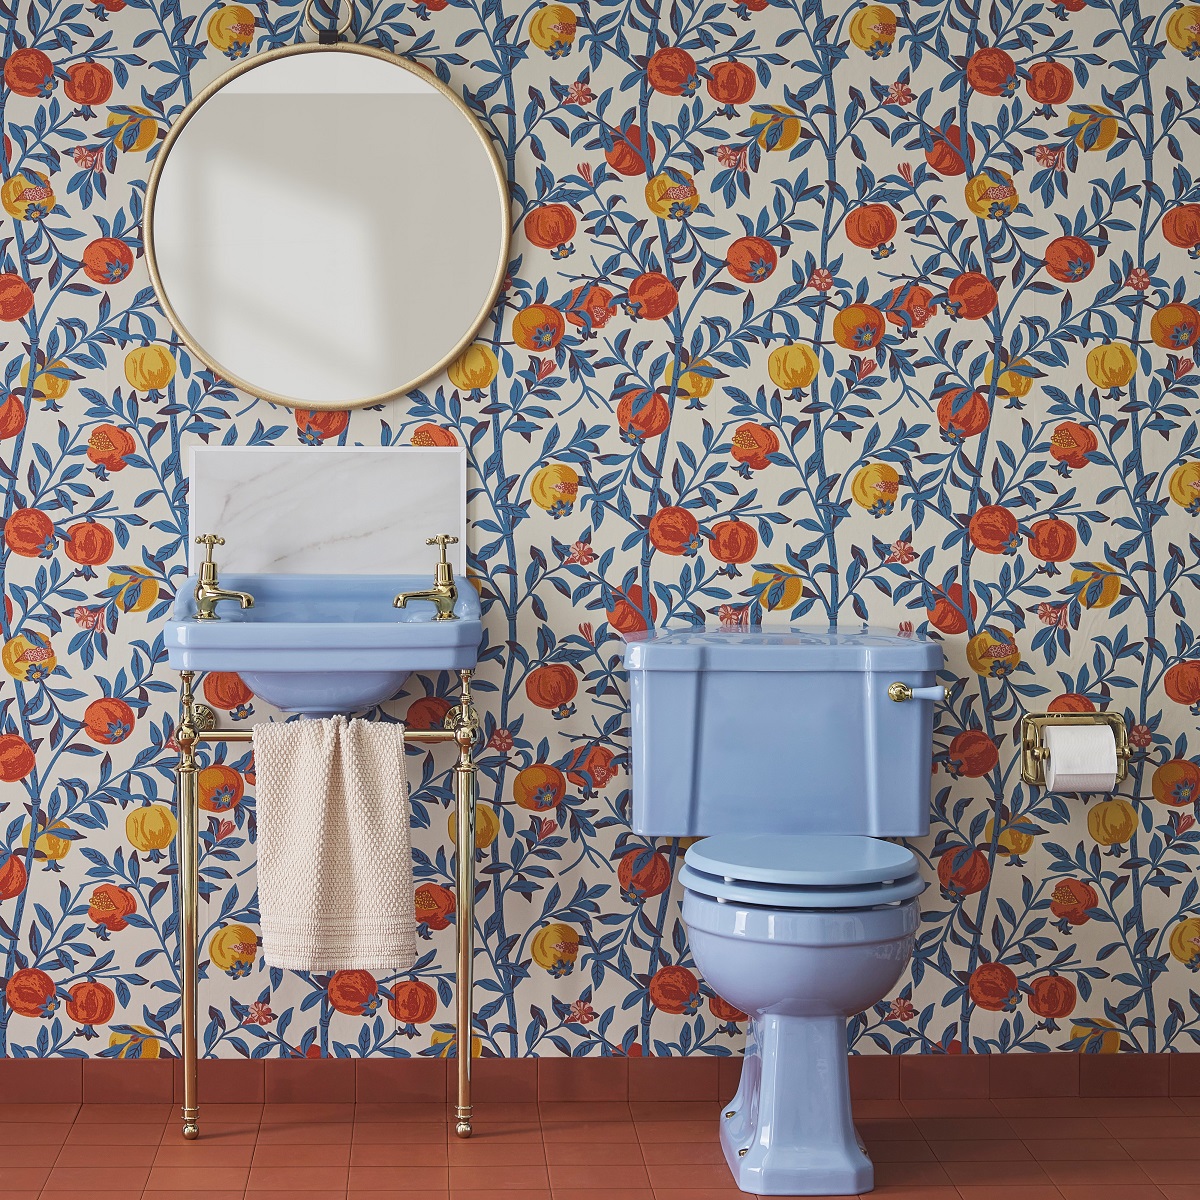 Burlington Bespoke basin and toilet in Enchanted Blue against floral wallpaper